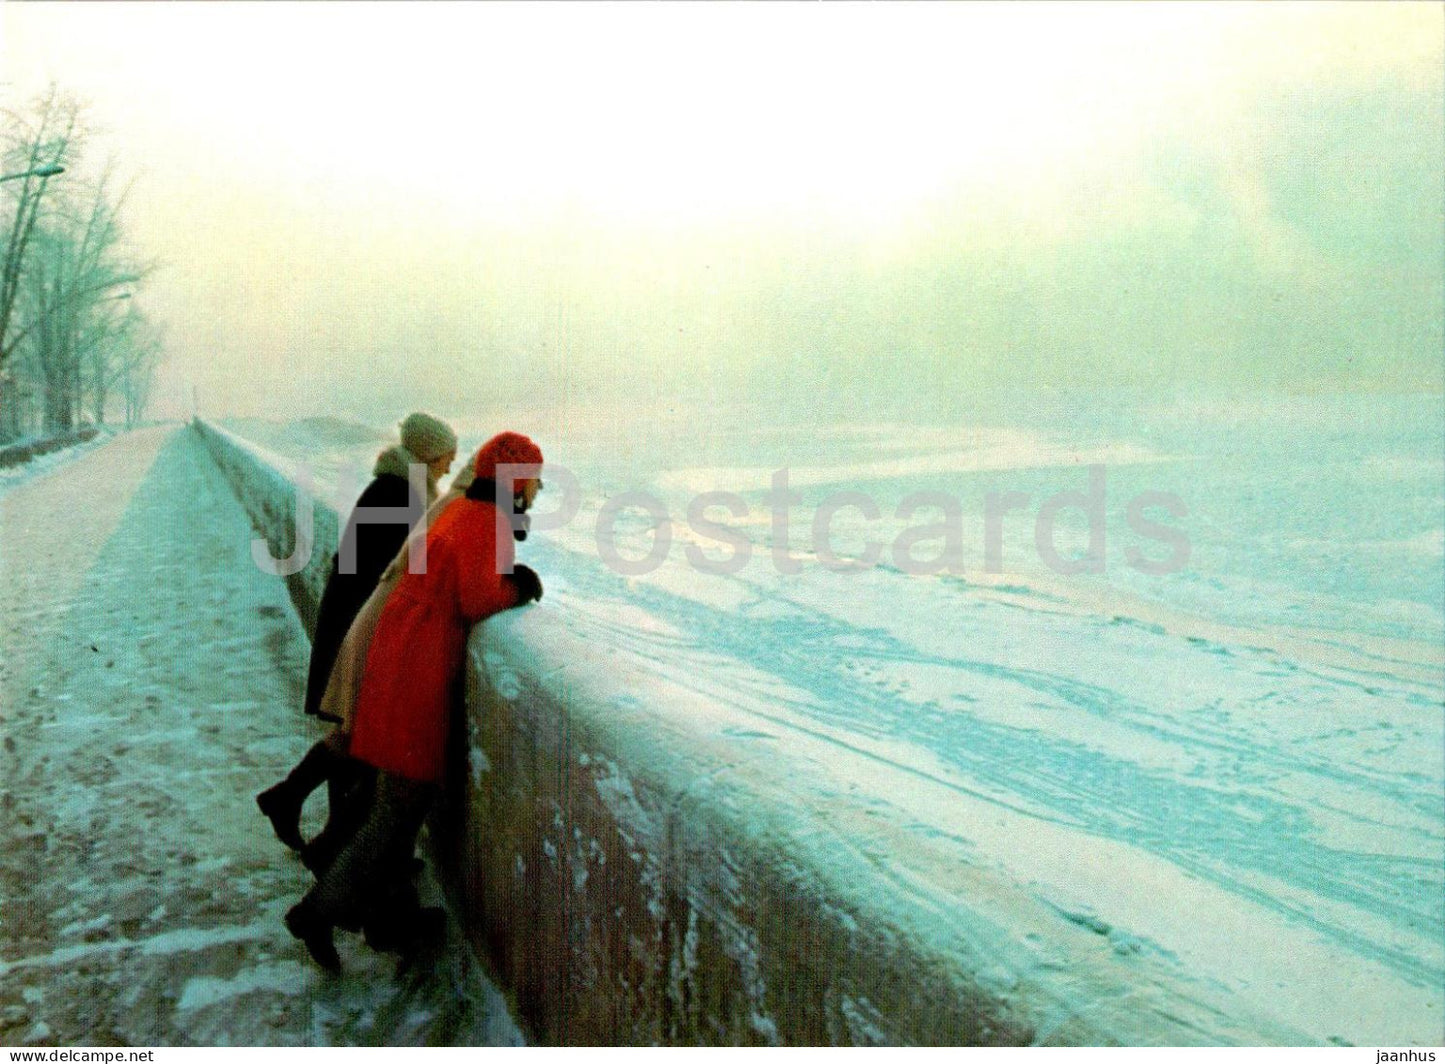 Irkutsk in Winter - Angara river - Russia - unused - JH Postcards